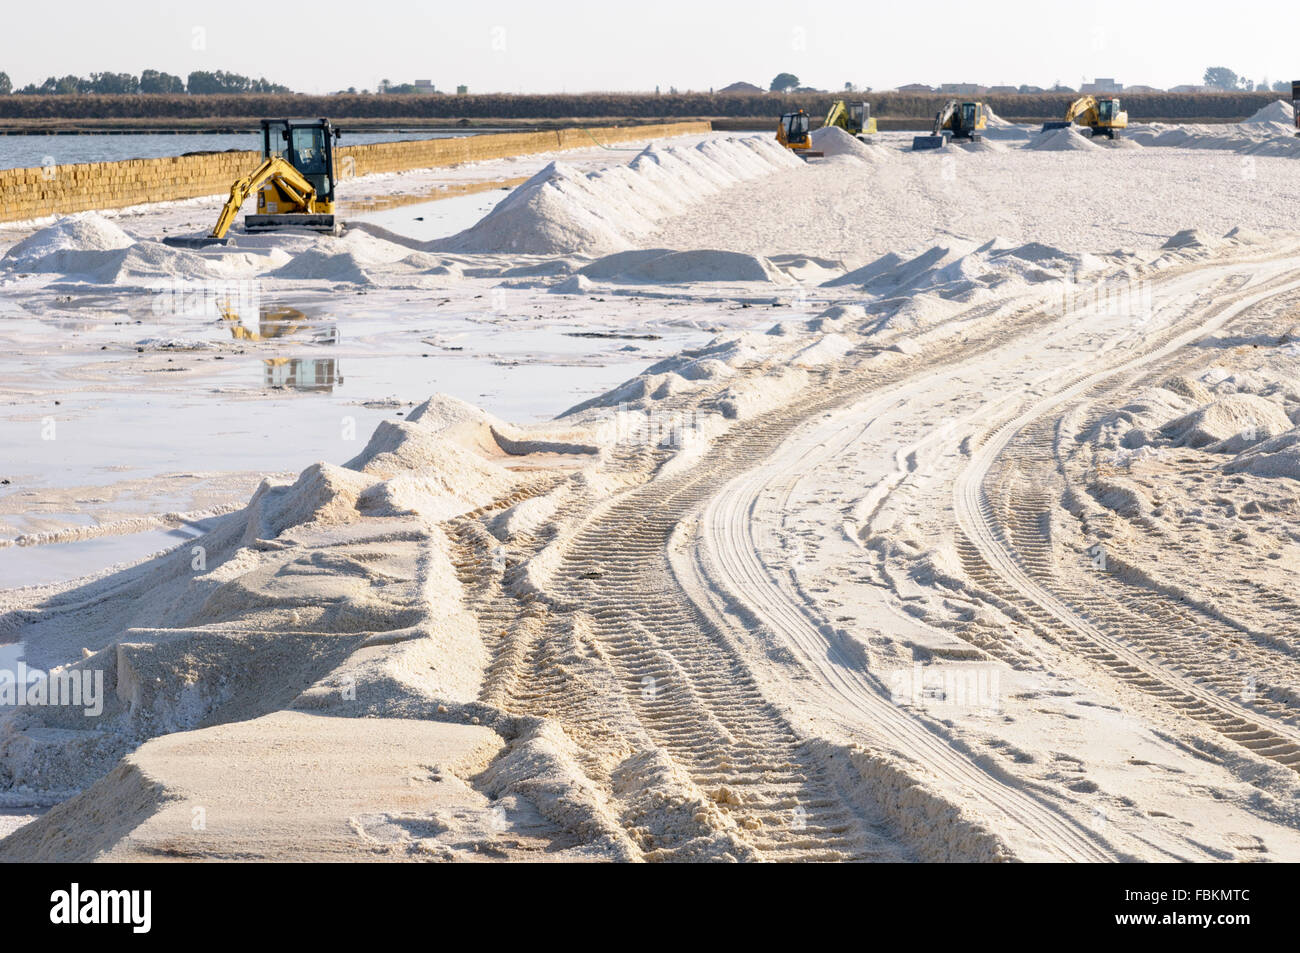 Italy, Sicily, Trapani. A Komatsu crawler excavator harvesting sea salt from a evaporation pond. Stock Photo